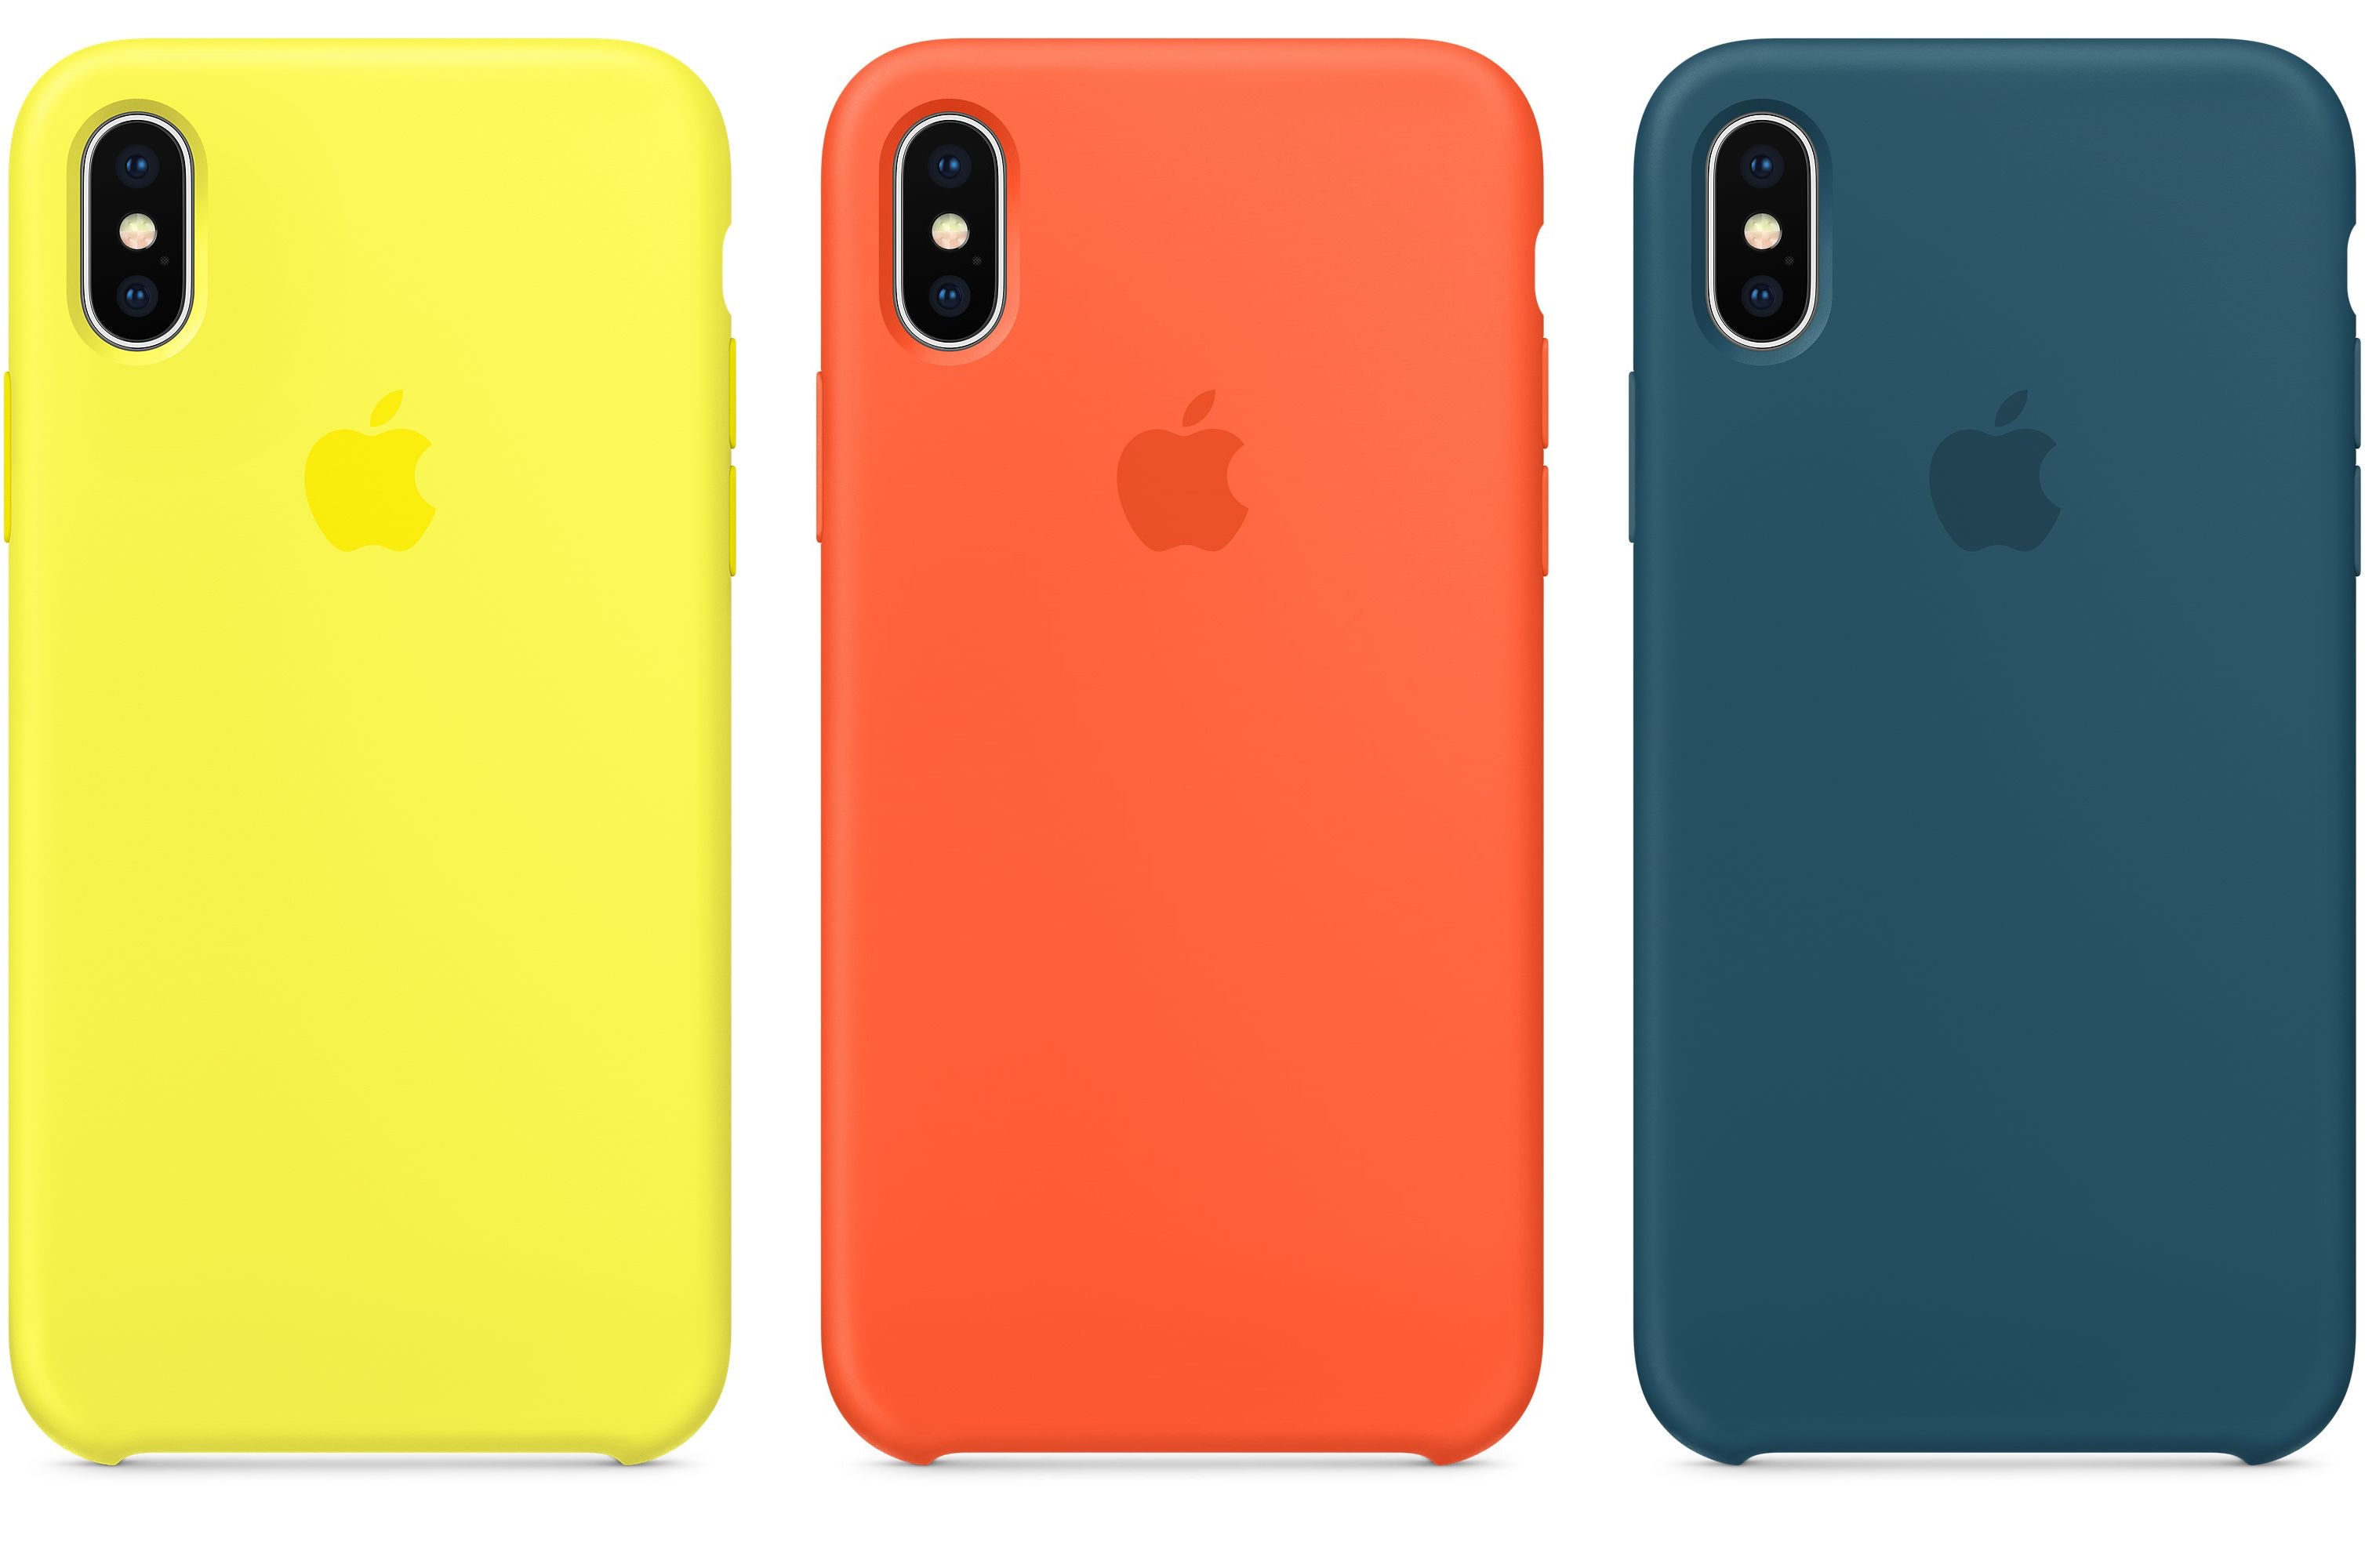 Novas cores de cases para iPhones